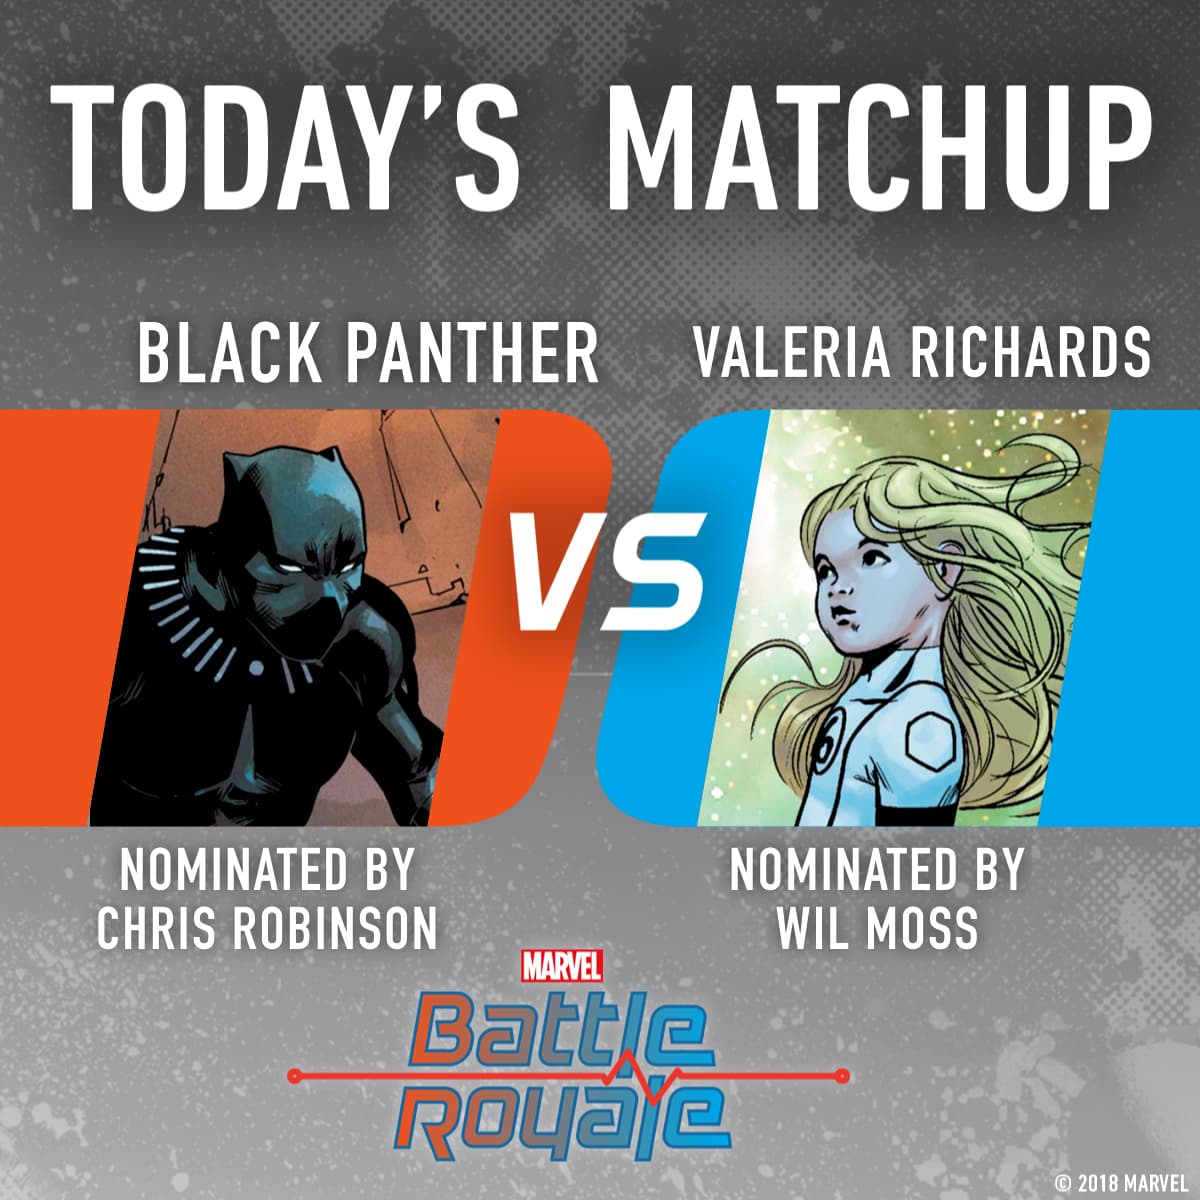 Black Panther vs. Valeria Richards